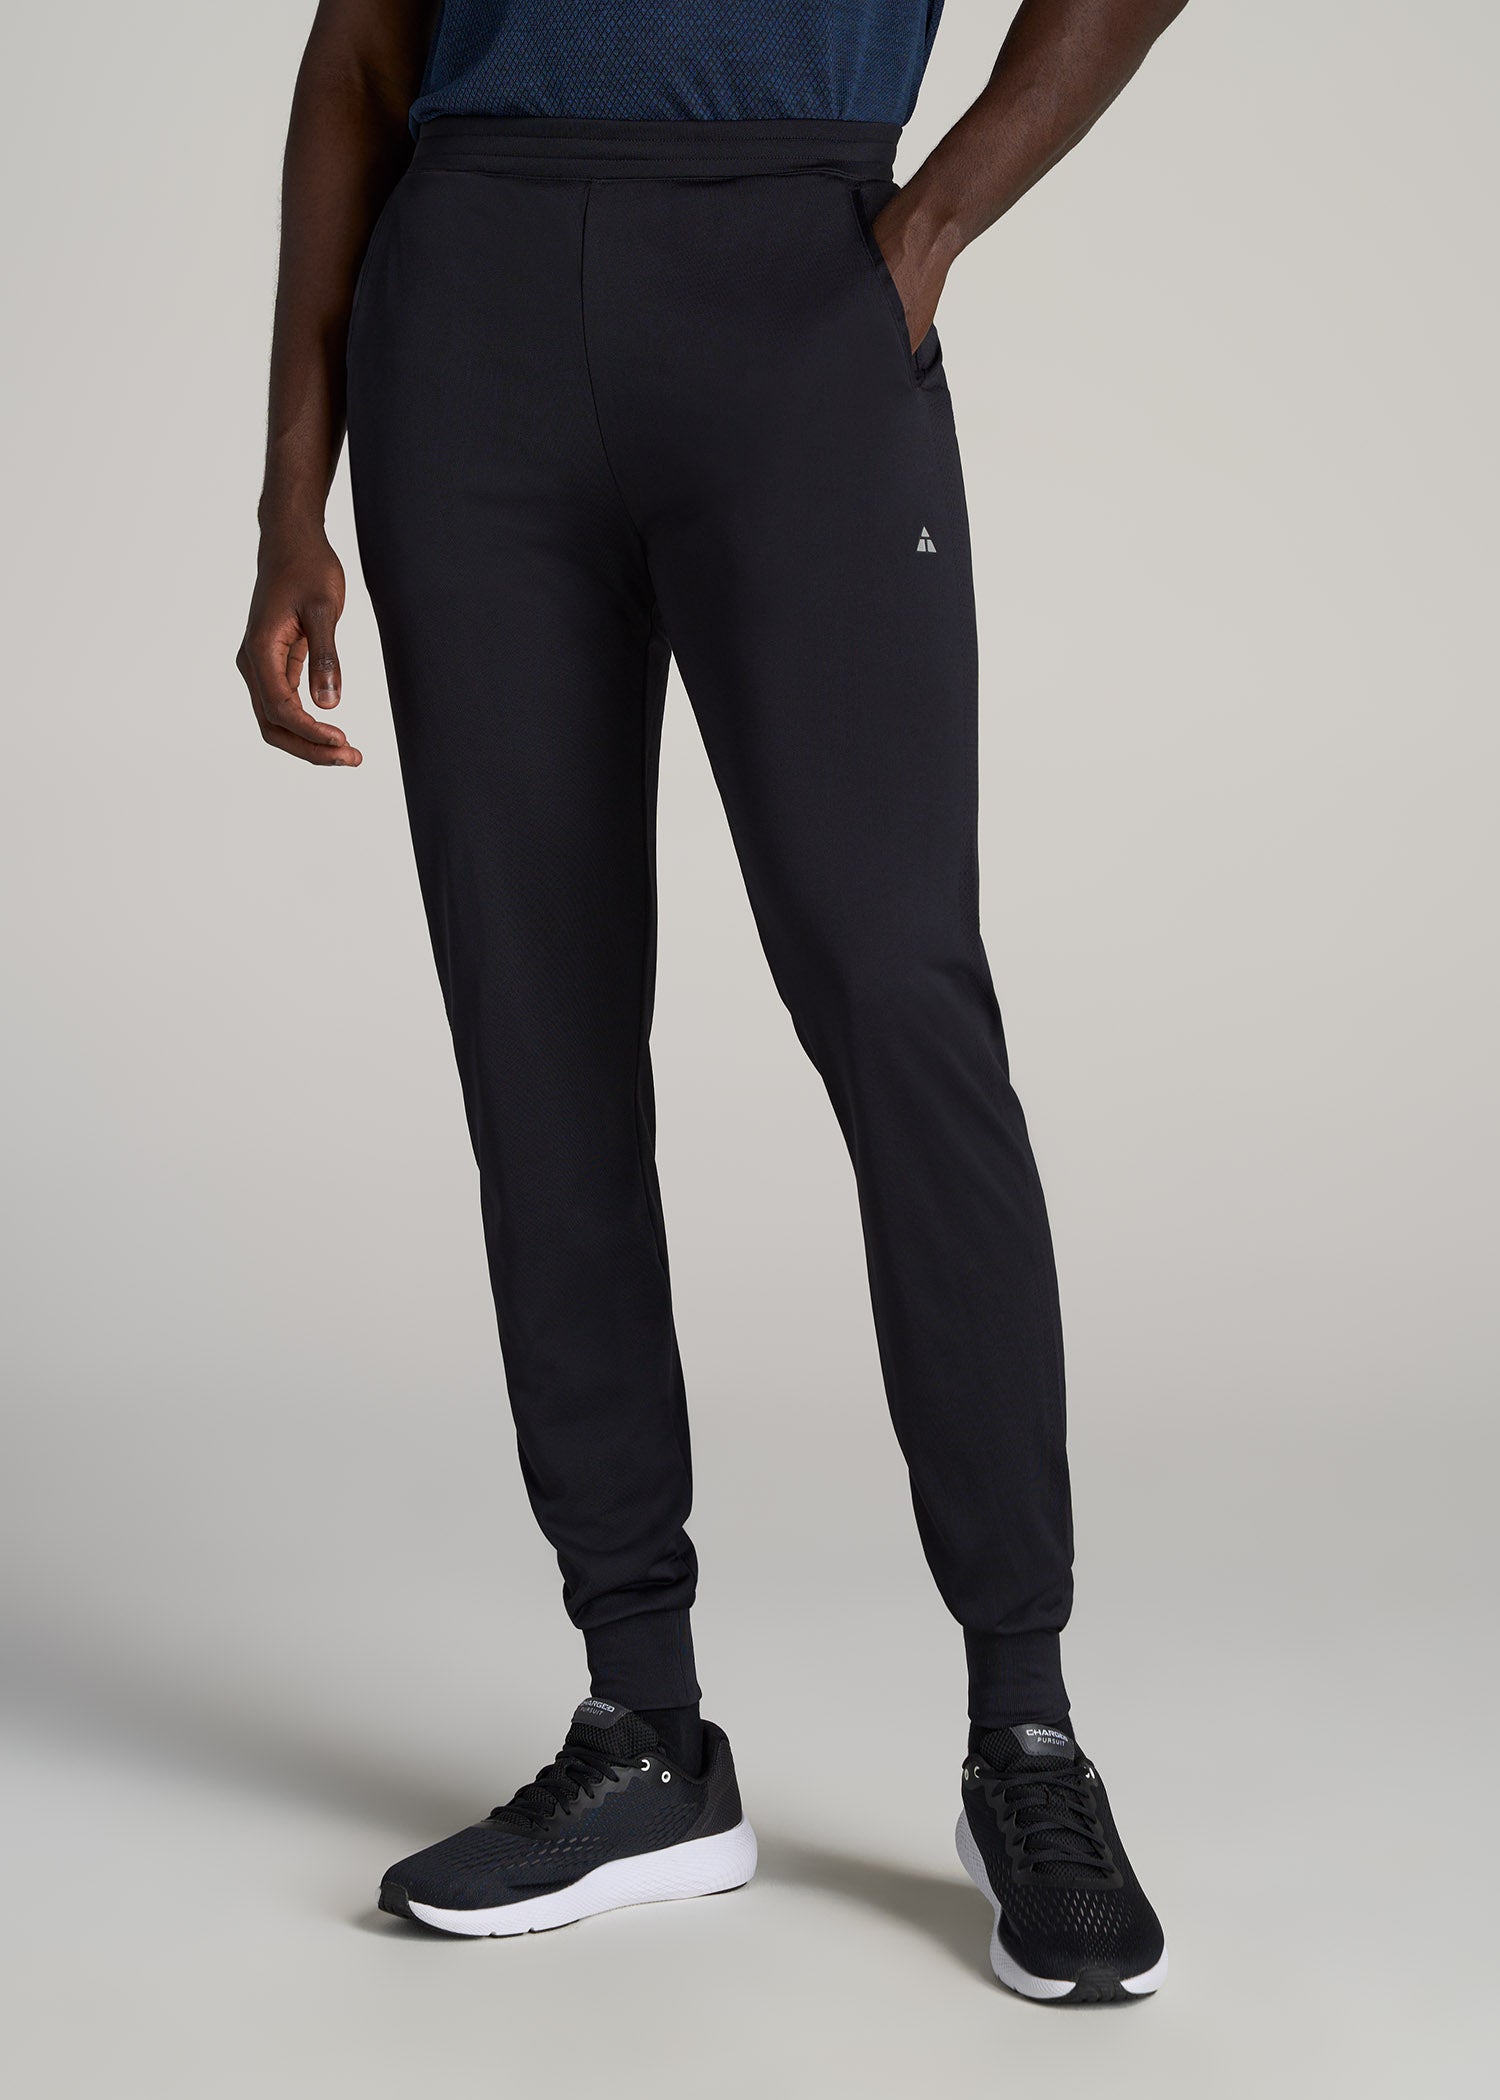 Men's Tall Joggers, Sweatpants for Tall Men